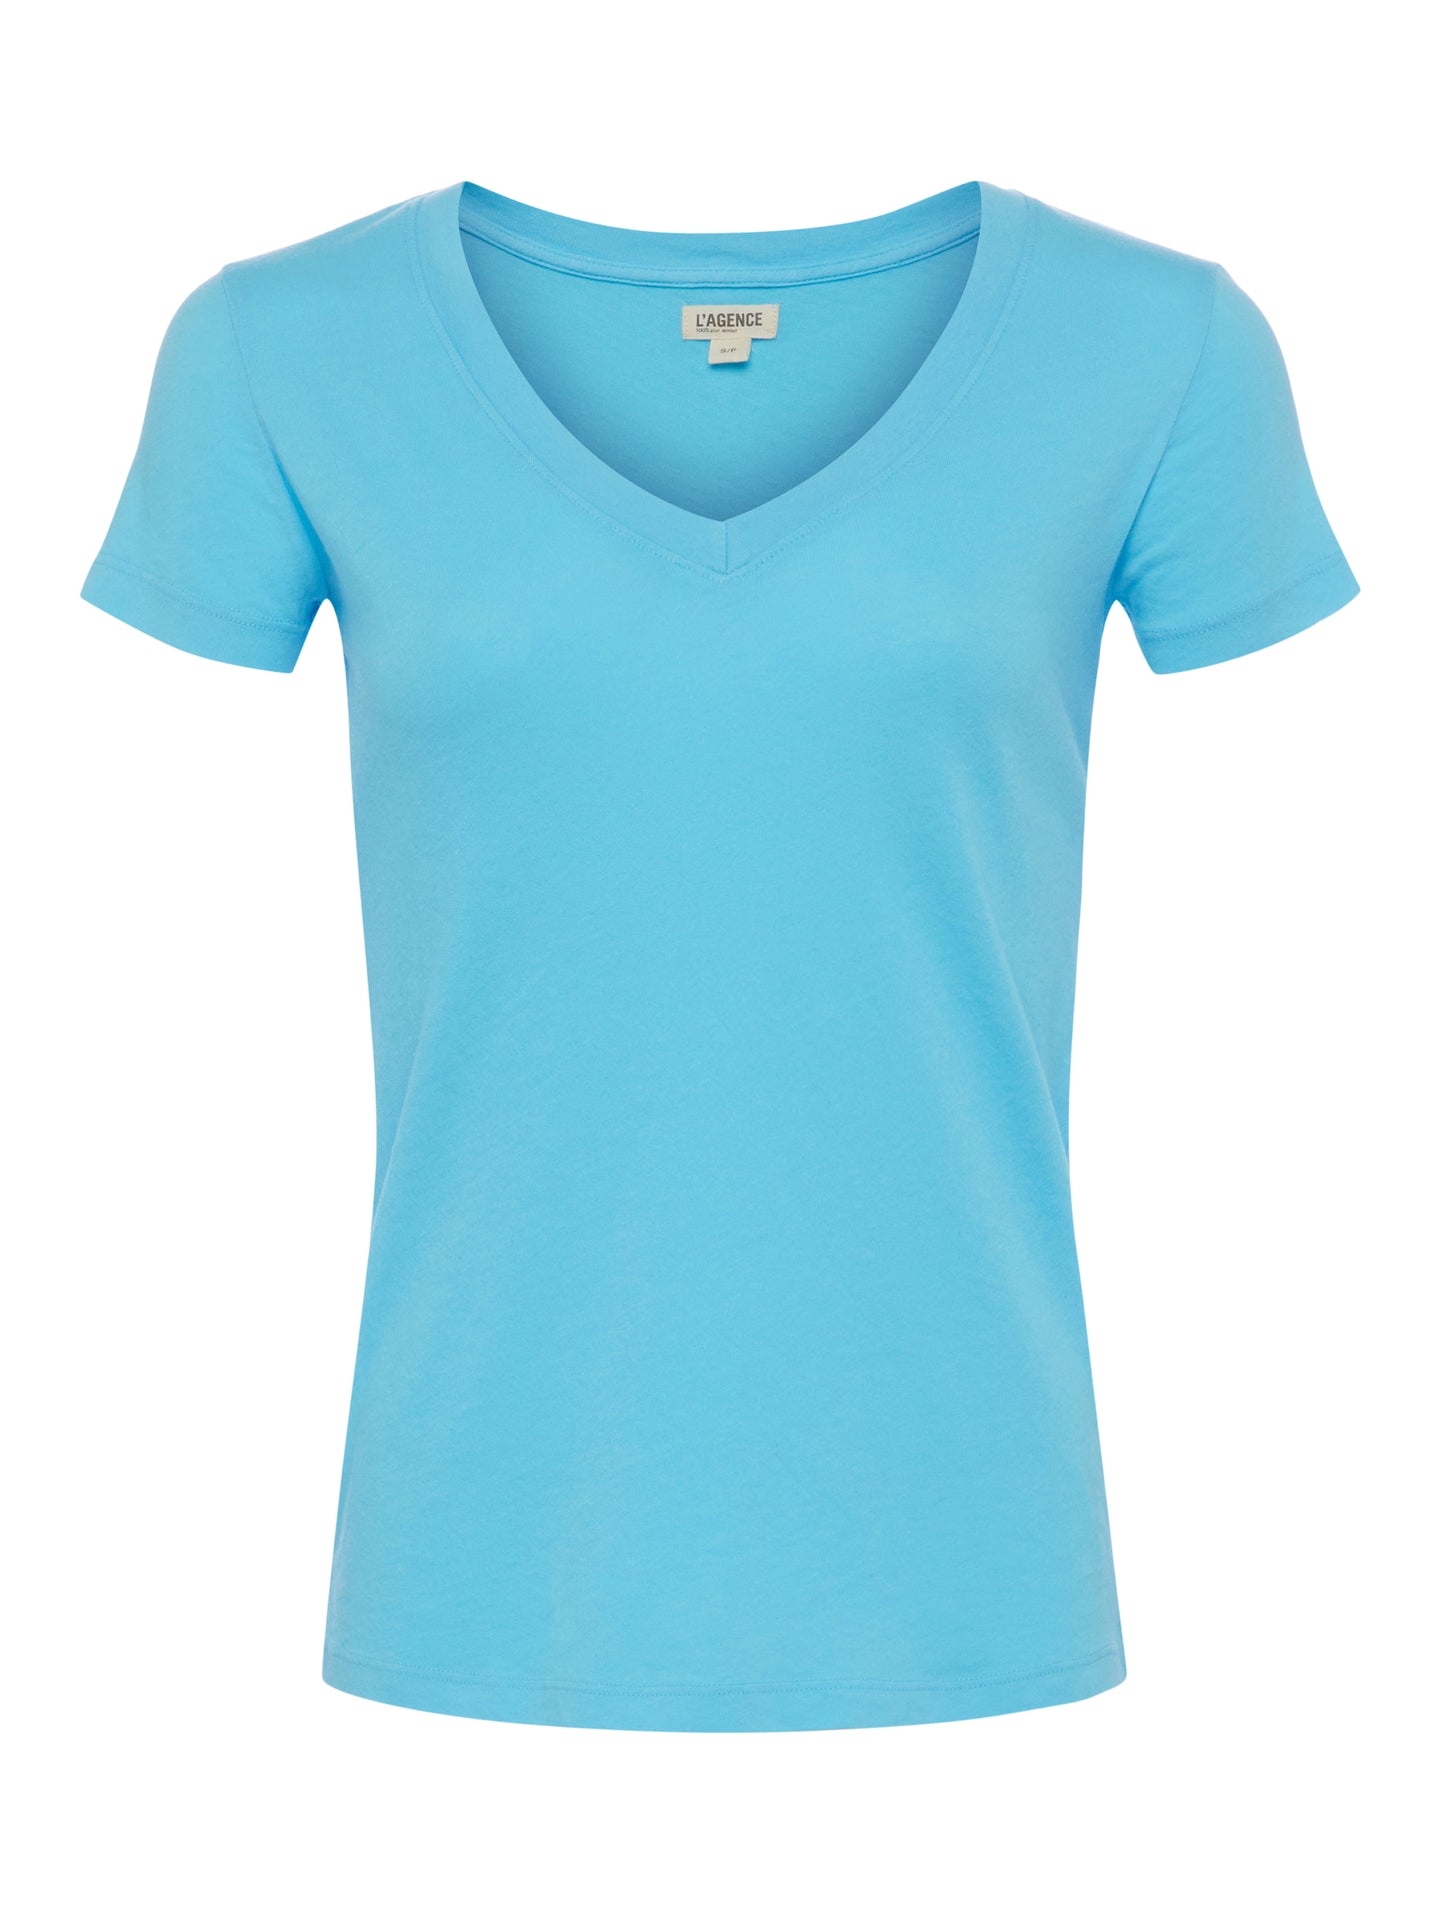 L'AGENCE - Women's Tees | Cotton & Modal T-shirts